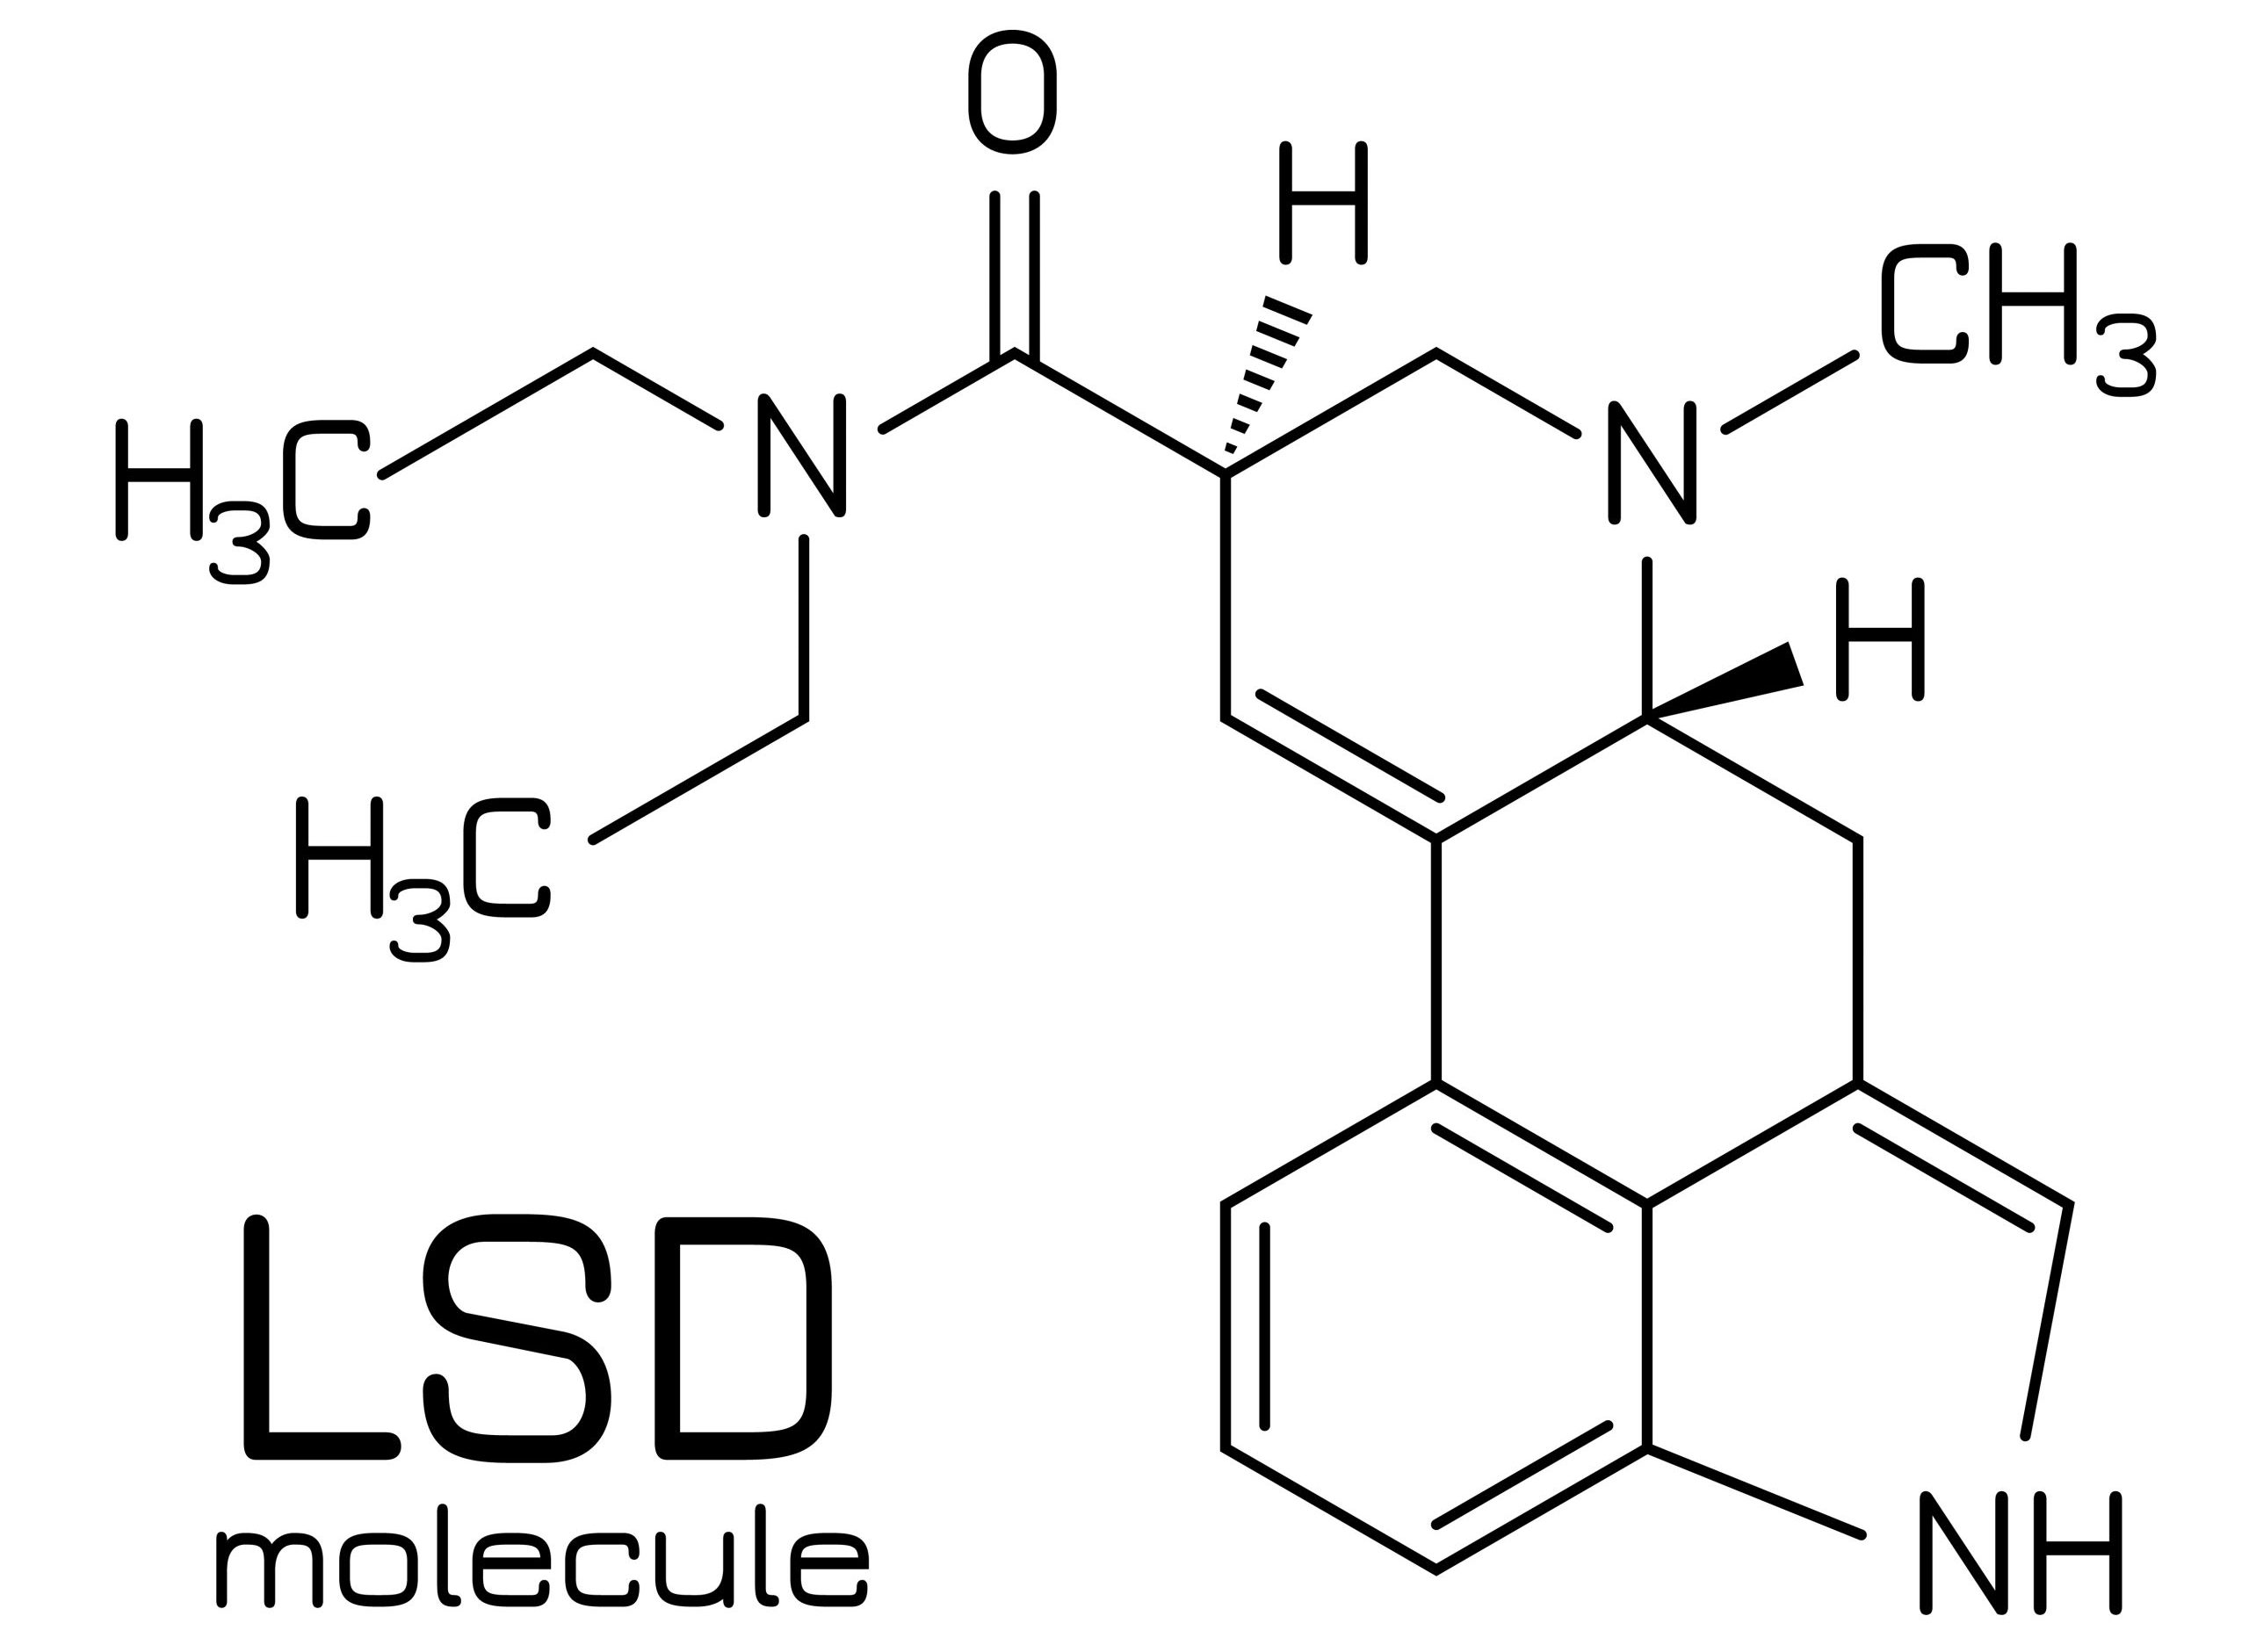 lsd molecule